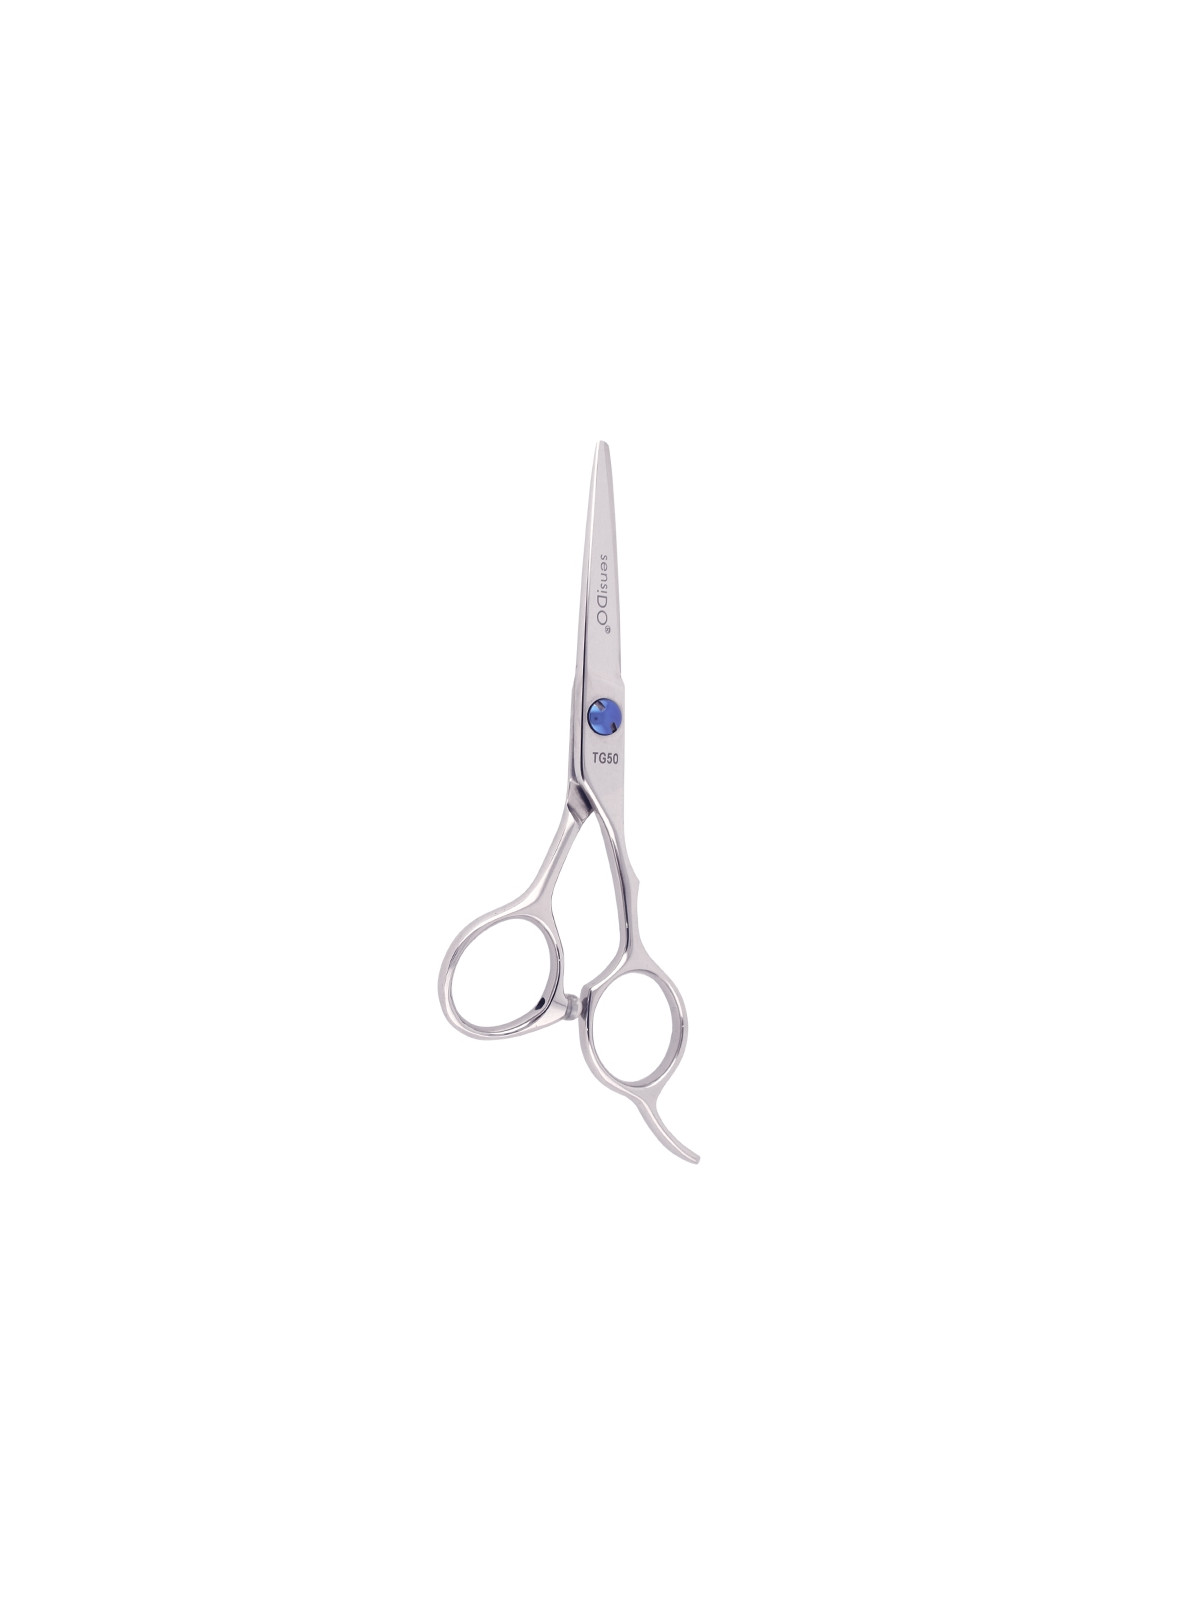 SensiDO TG cutting scissors